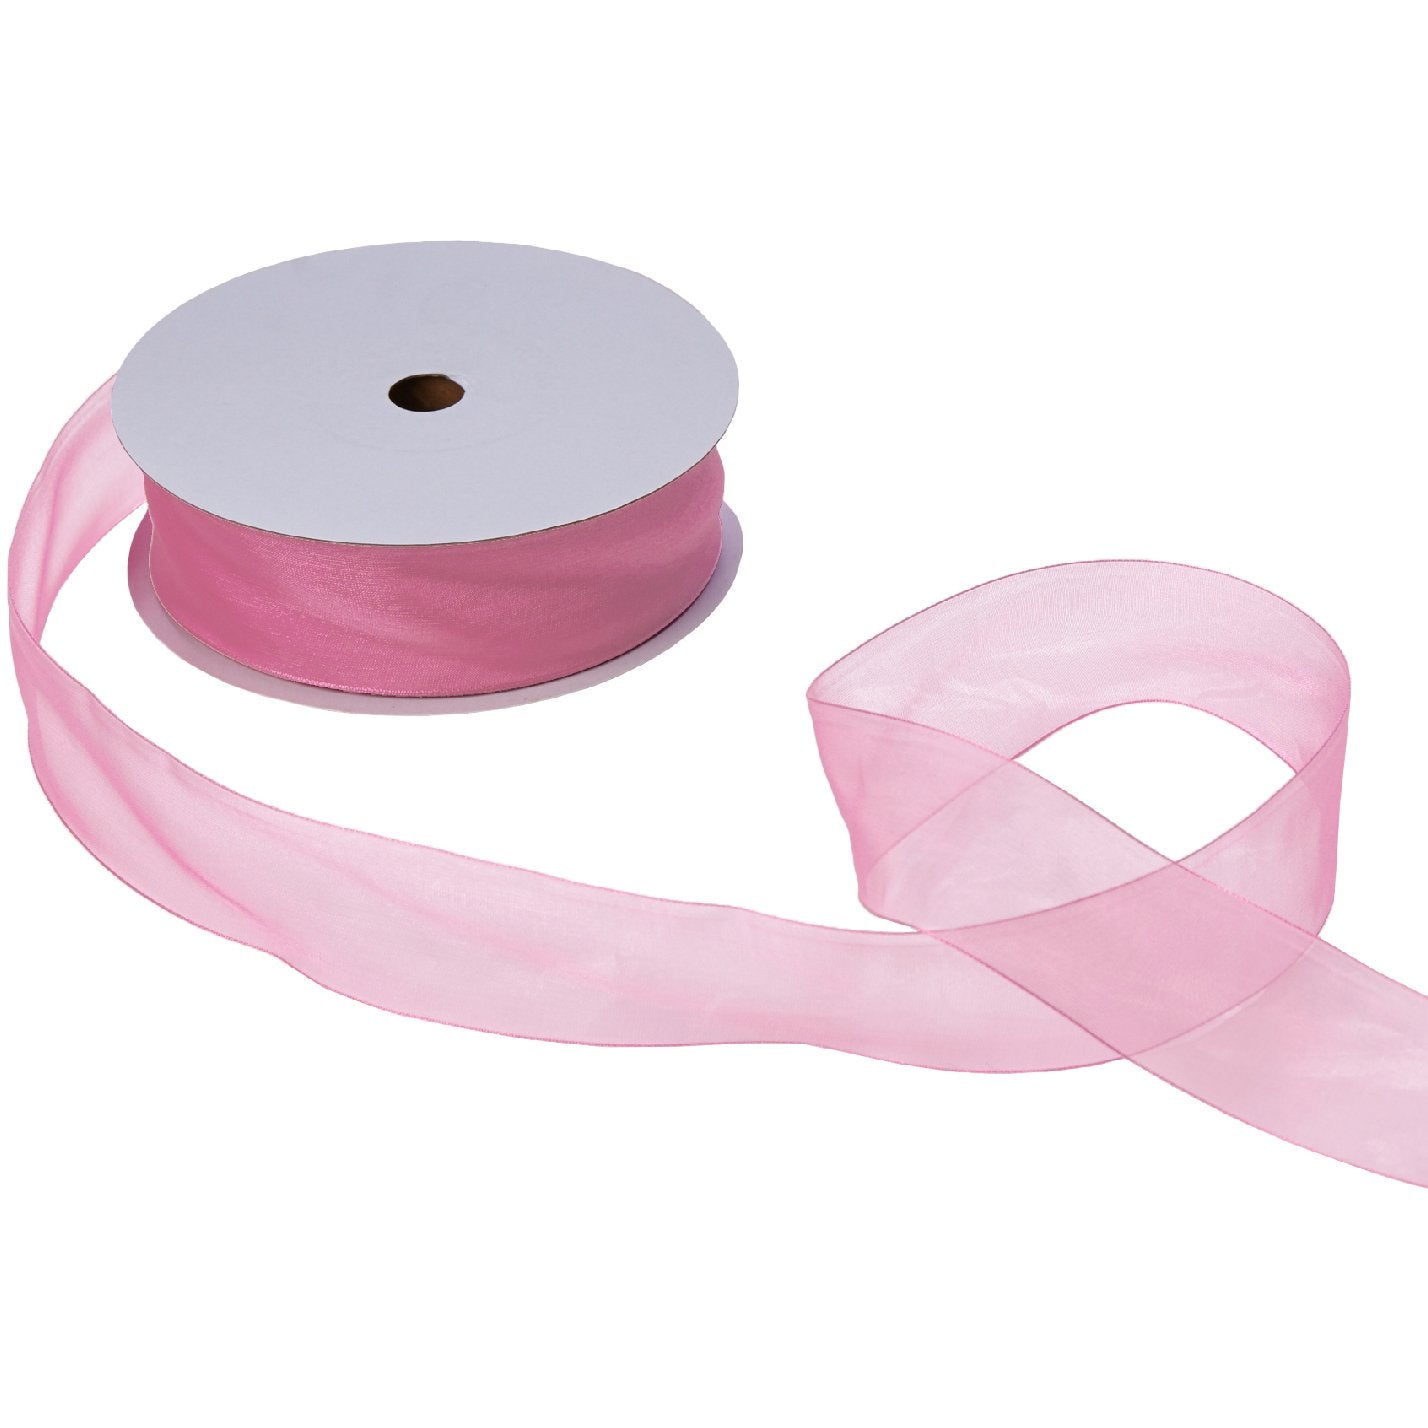 Jillson & Roberts Organdy Sheer Ribbon, 1 1/2" Wide x 100 Yards, Pastel Pink